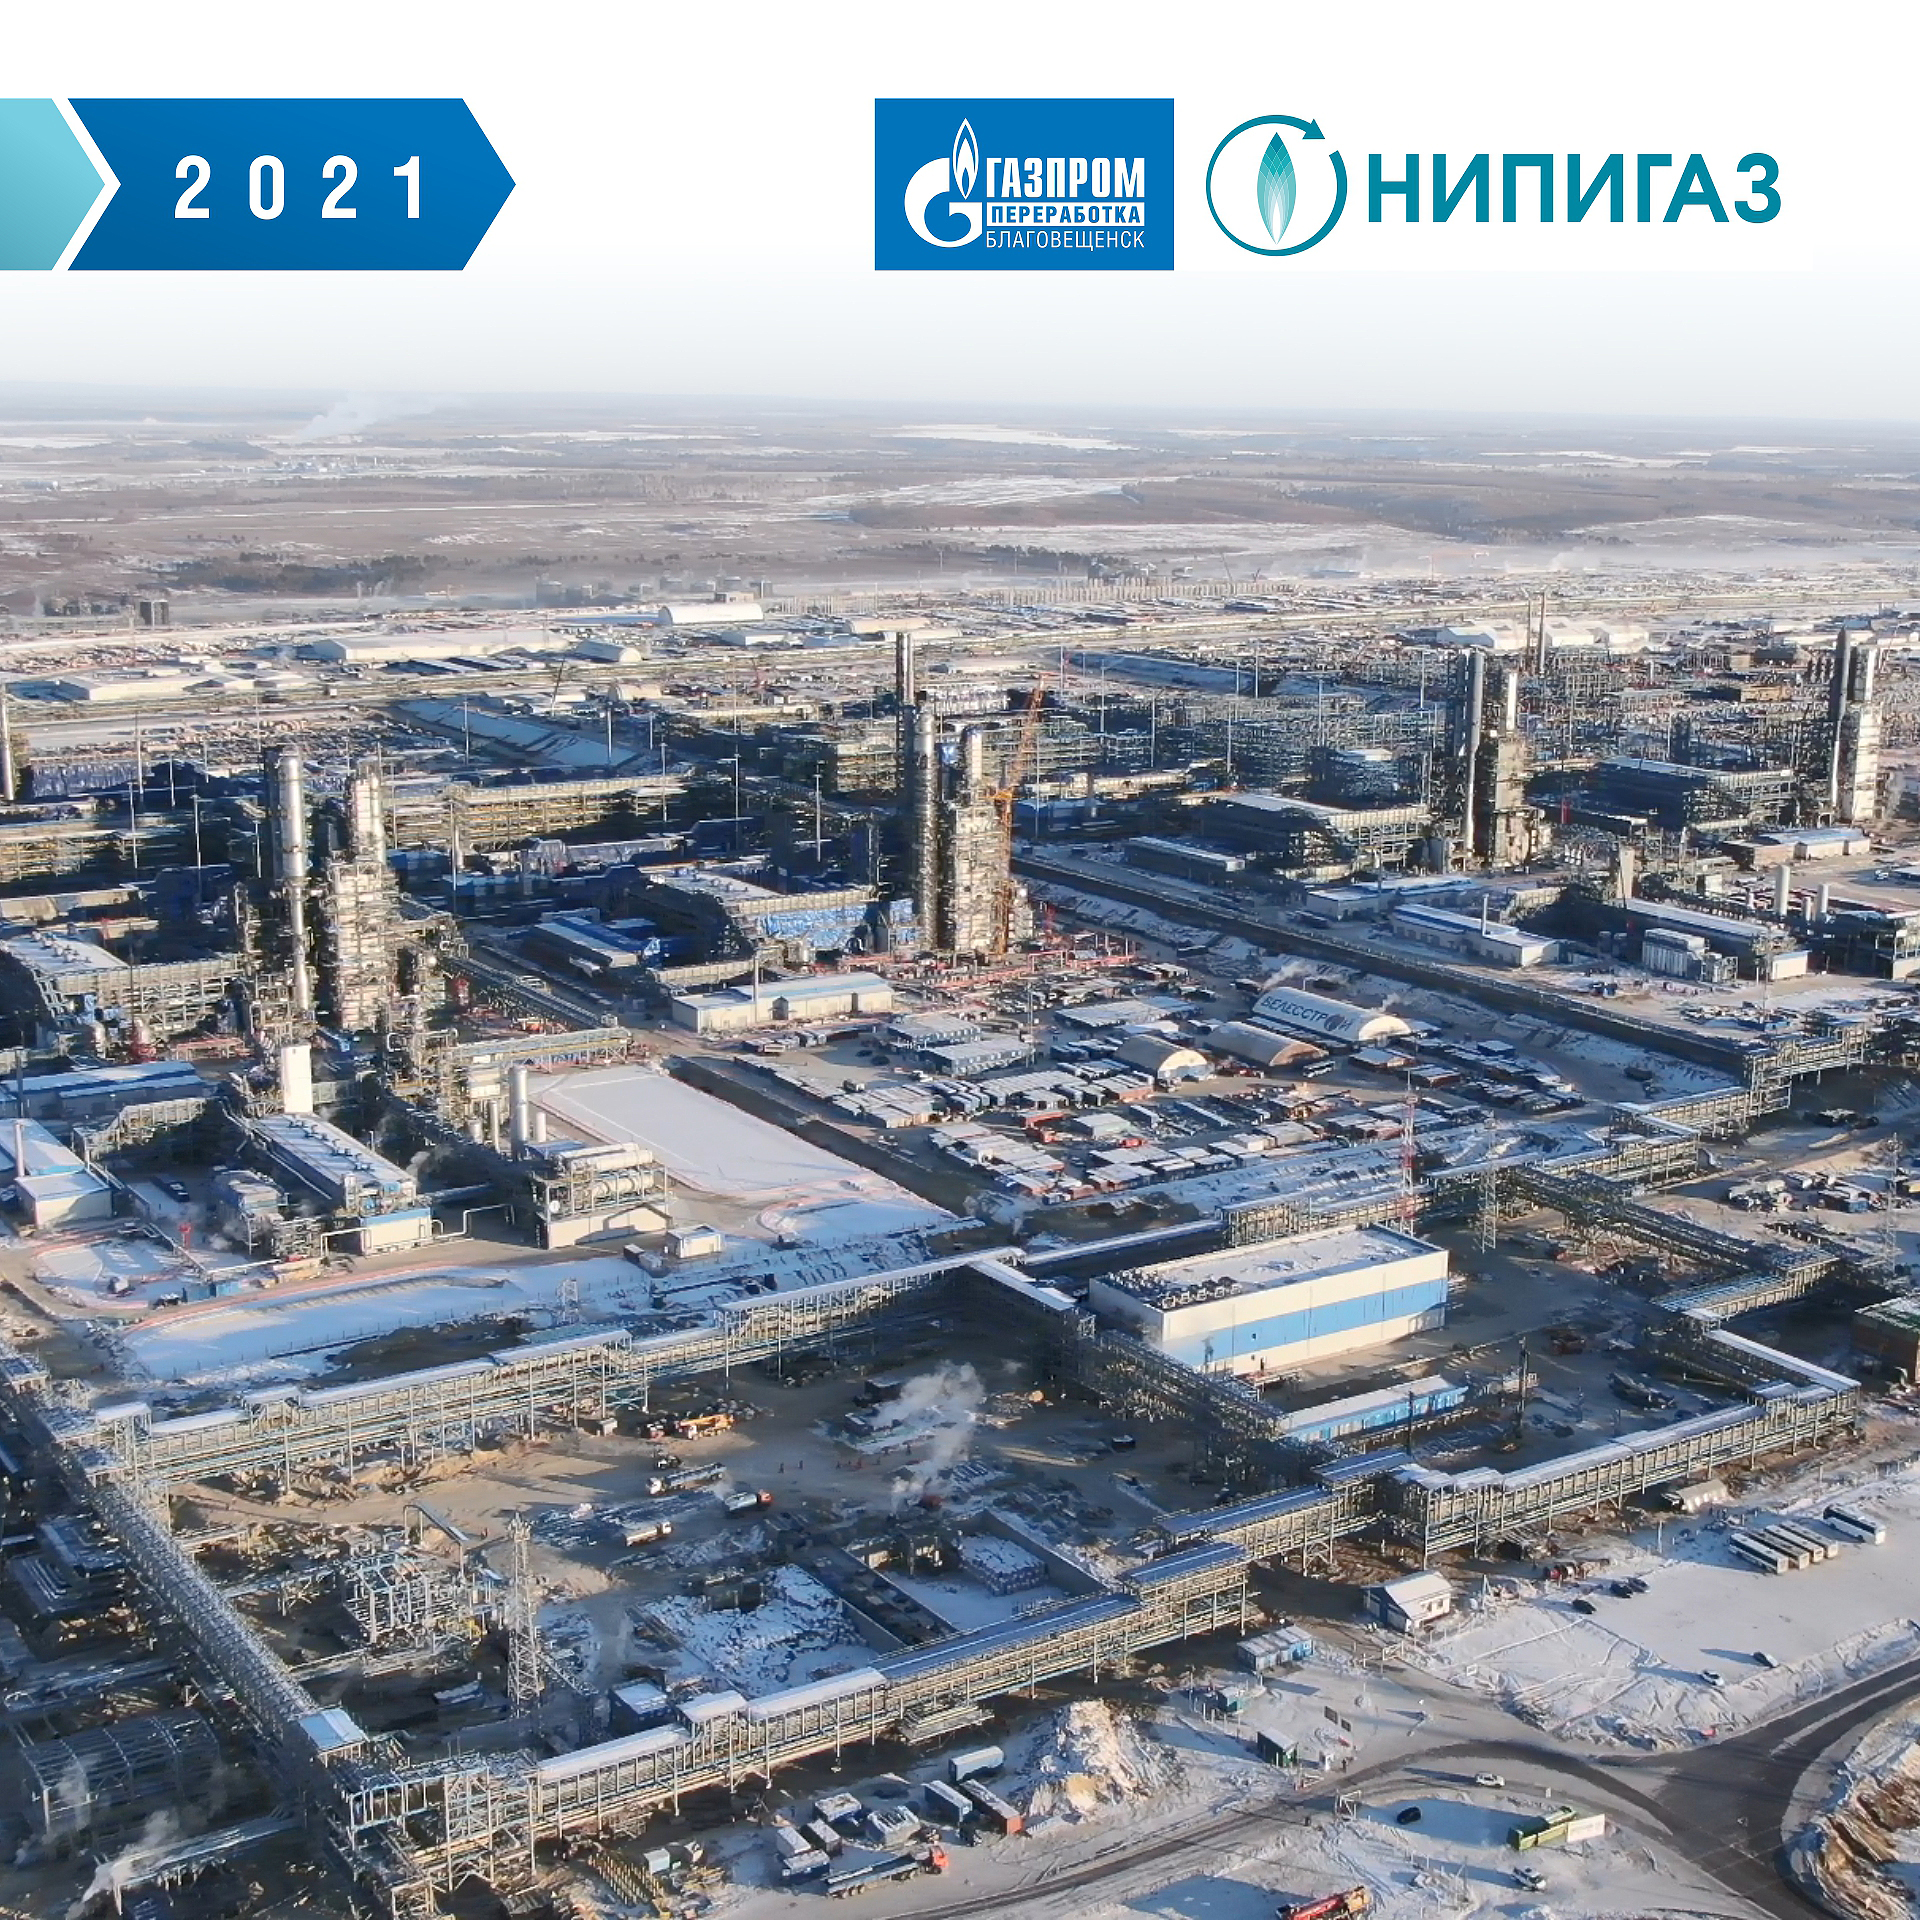 Amur GPP construction site in 2021.